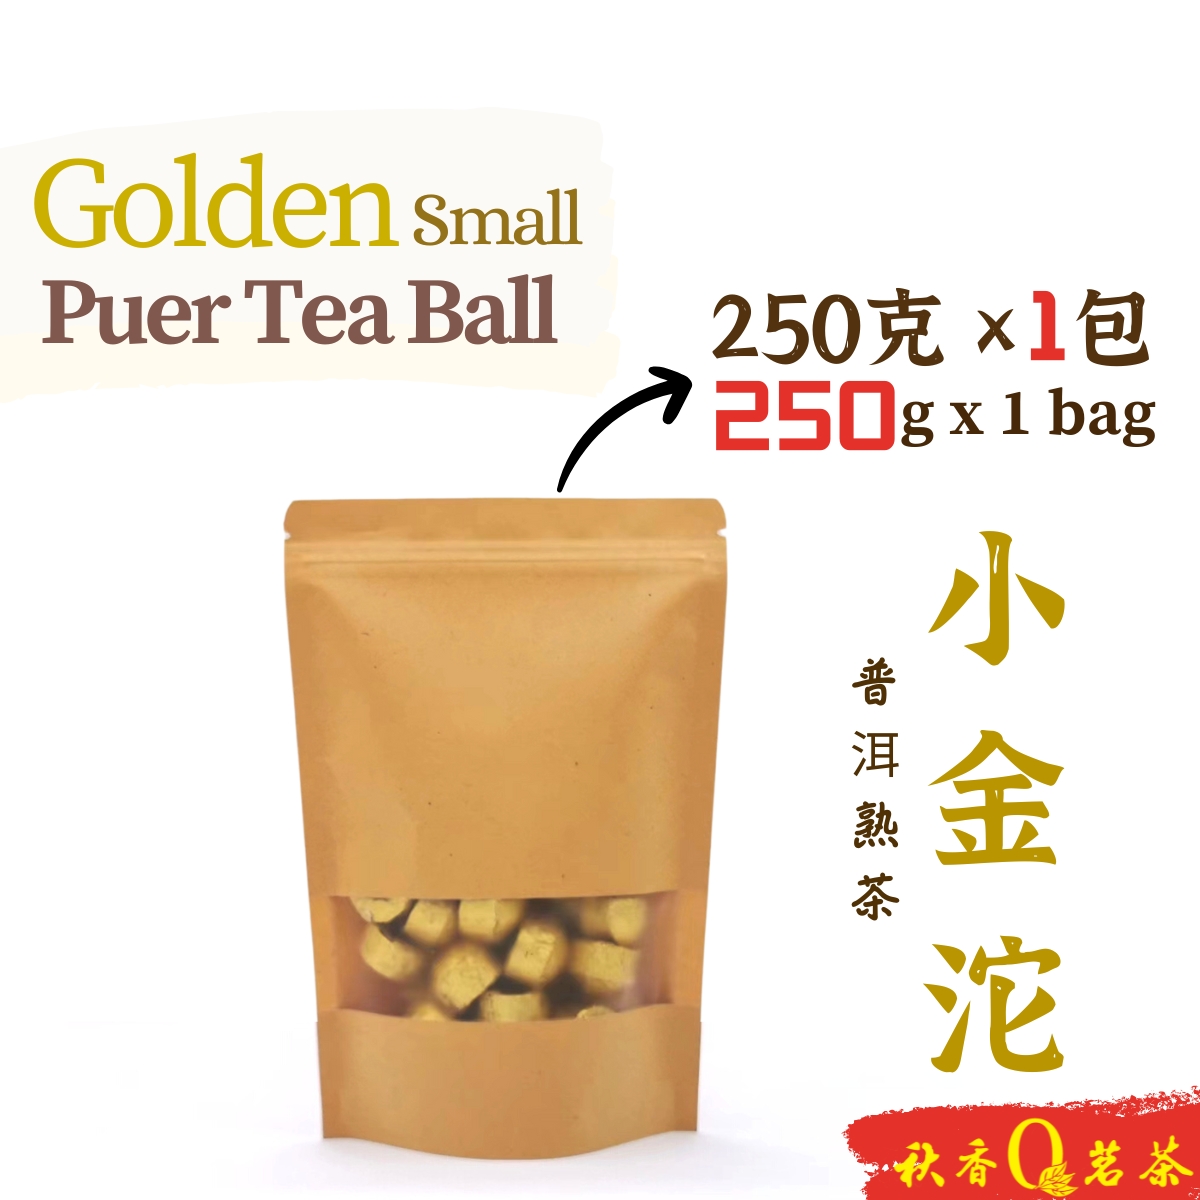 小金沱 Golden Small Puer Tea Ball 【250g】|【普洱熟茶 Ripe Puer tea】